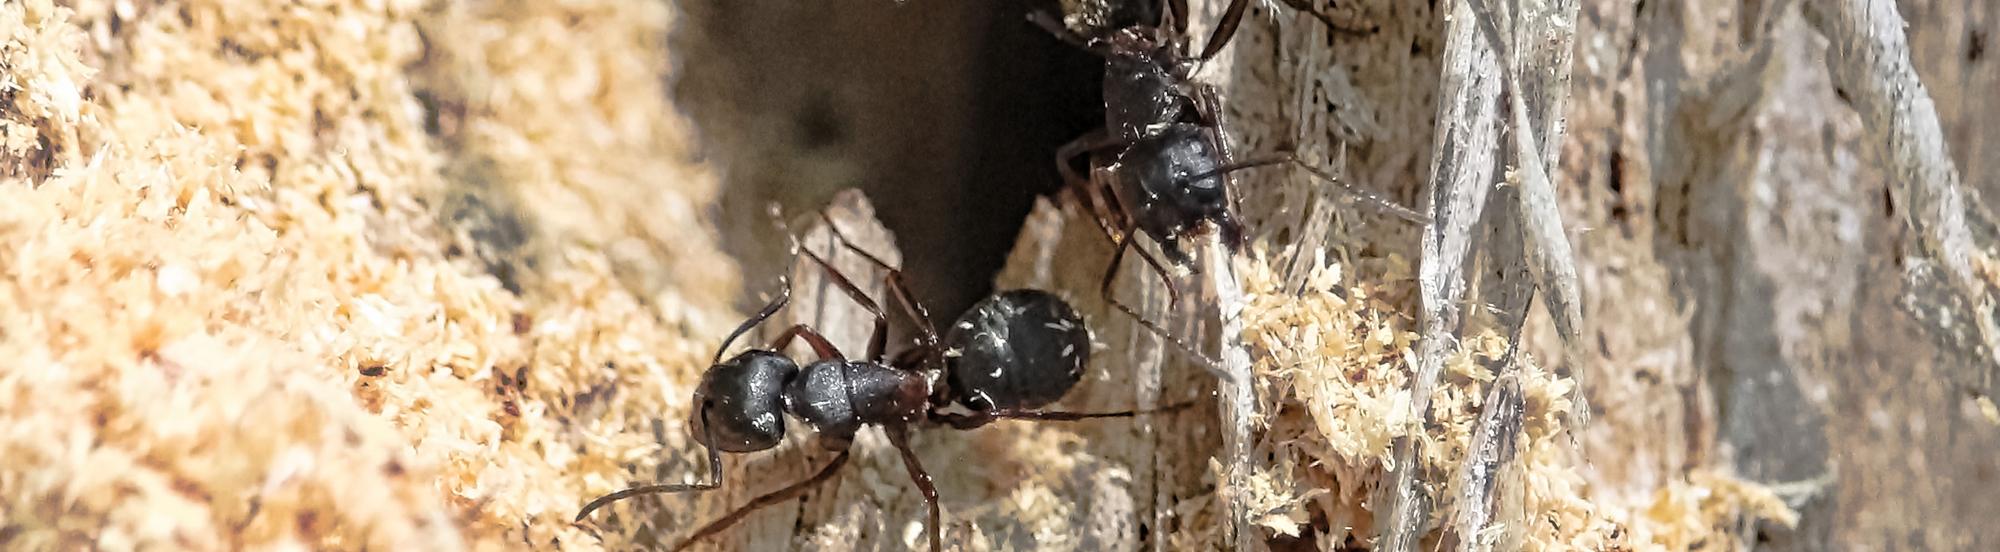 carpenter ant crawling in stump